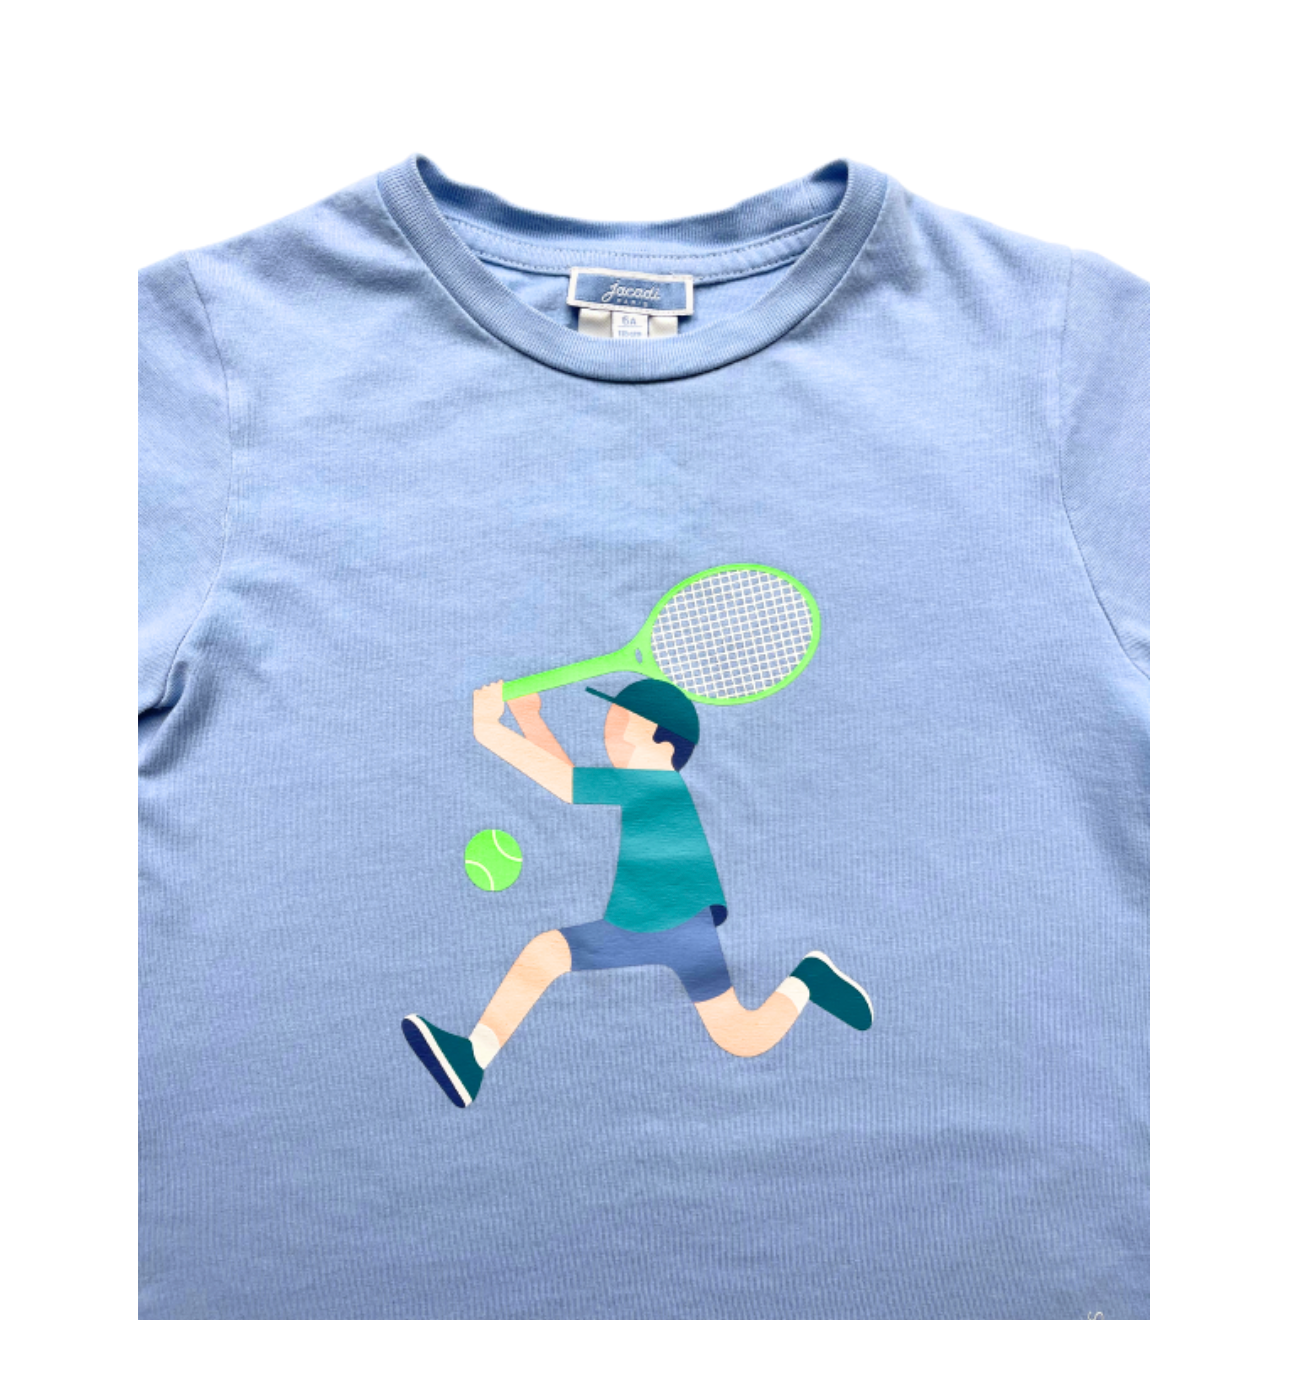 JACADI - Tshirt joueur de tennis bleu - 6 ans